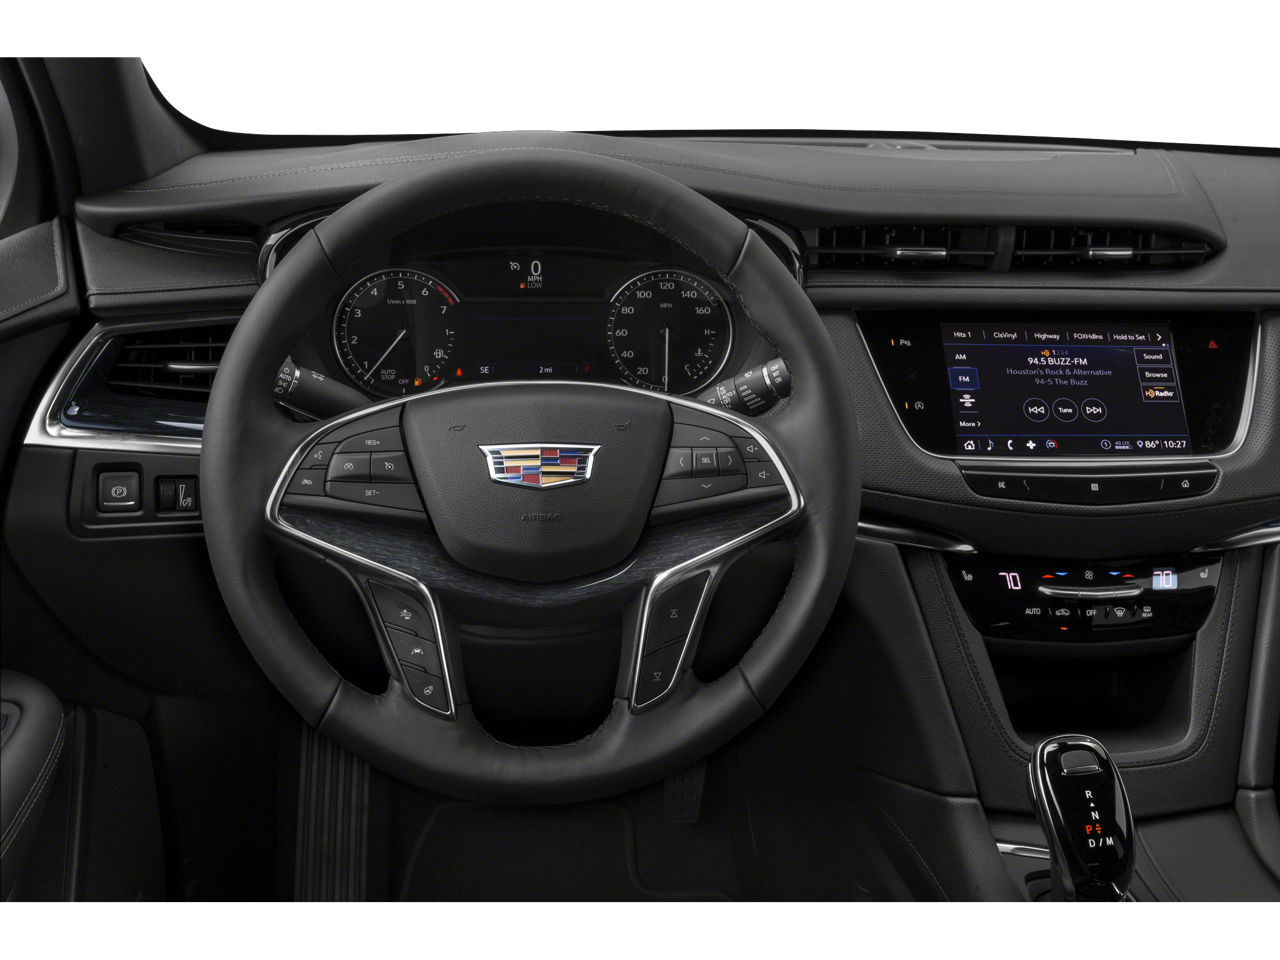 2020 Cadillac XT5 Premium Luxury w/Navigation, Pano Moonroof, Heated Seats!